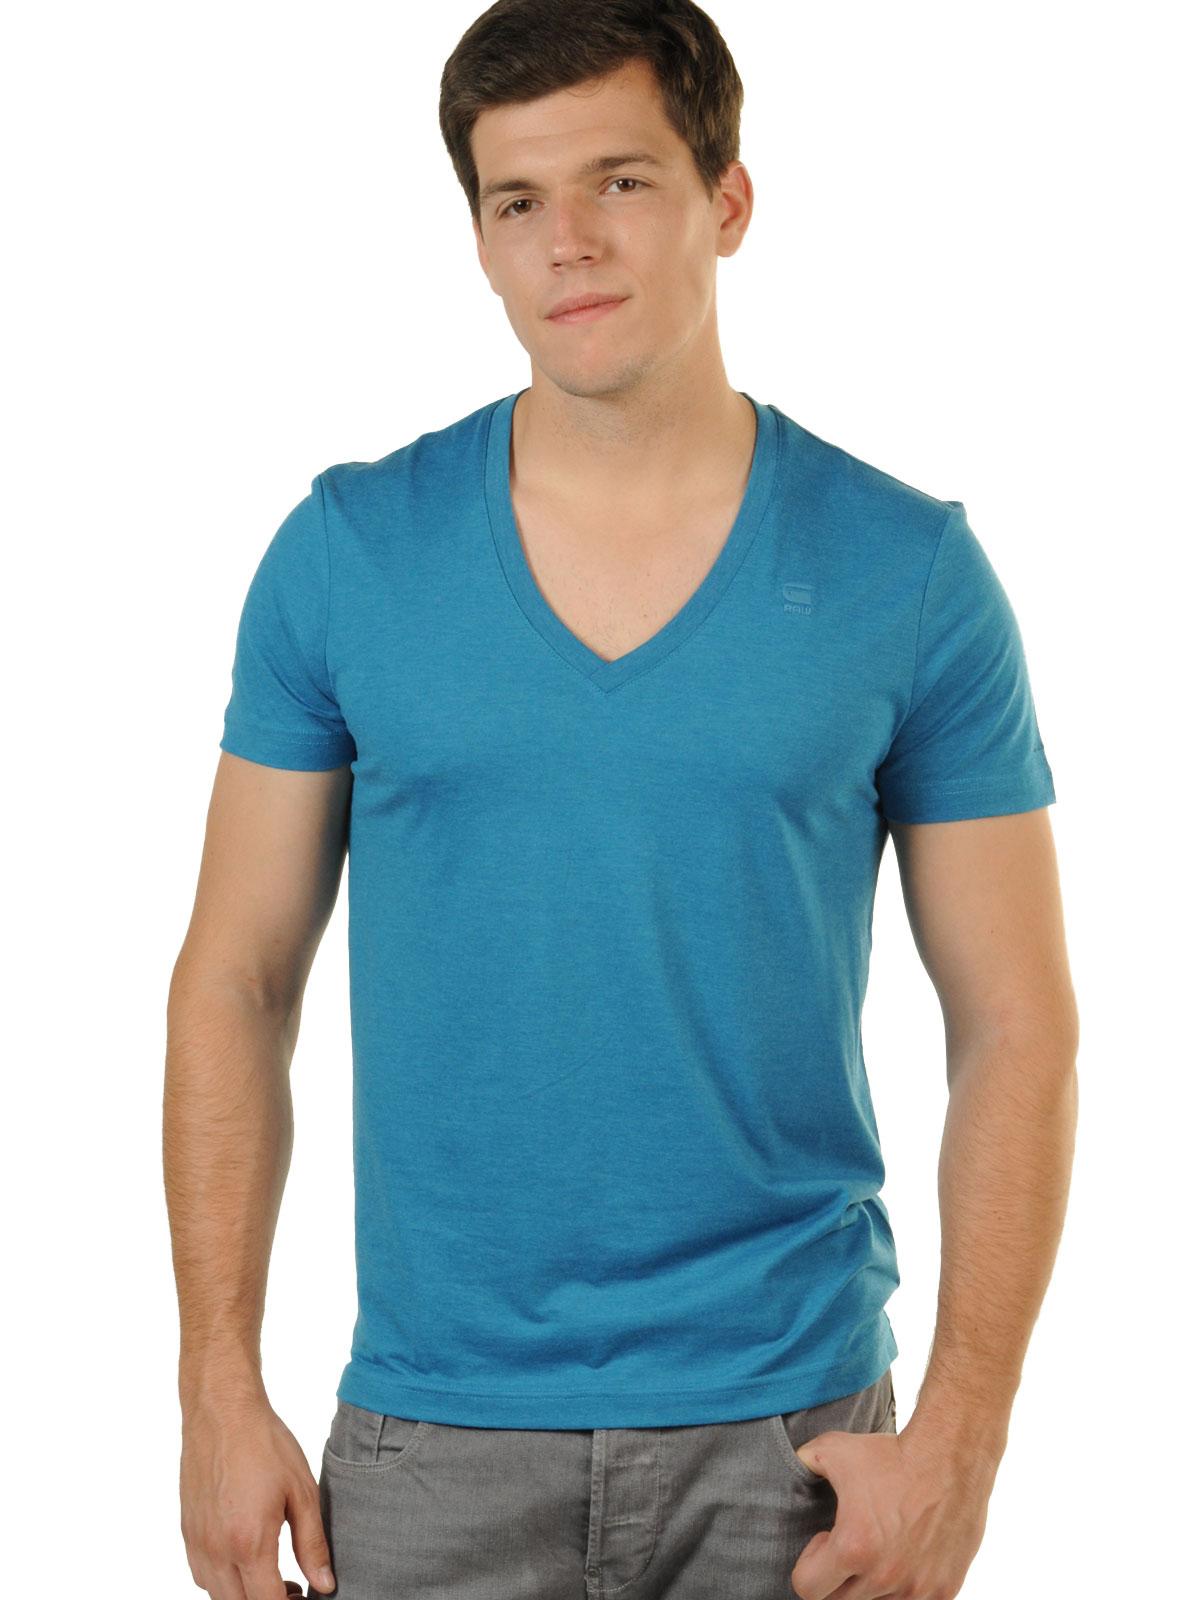 Foto G-Star Lote 2 camisetas V hombre teal azul M foto 376944